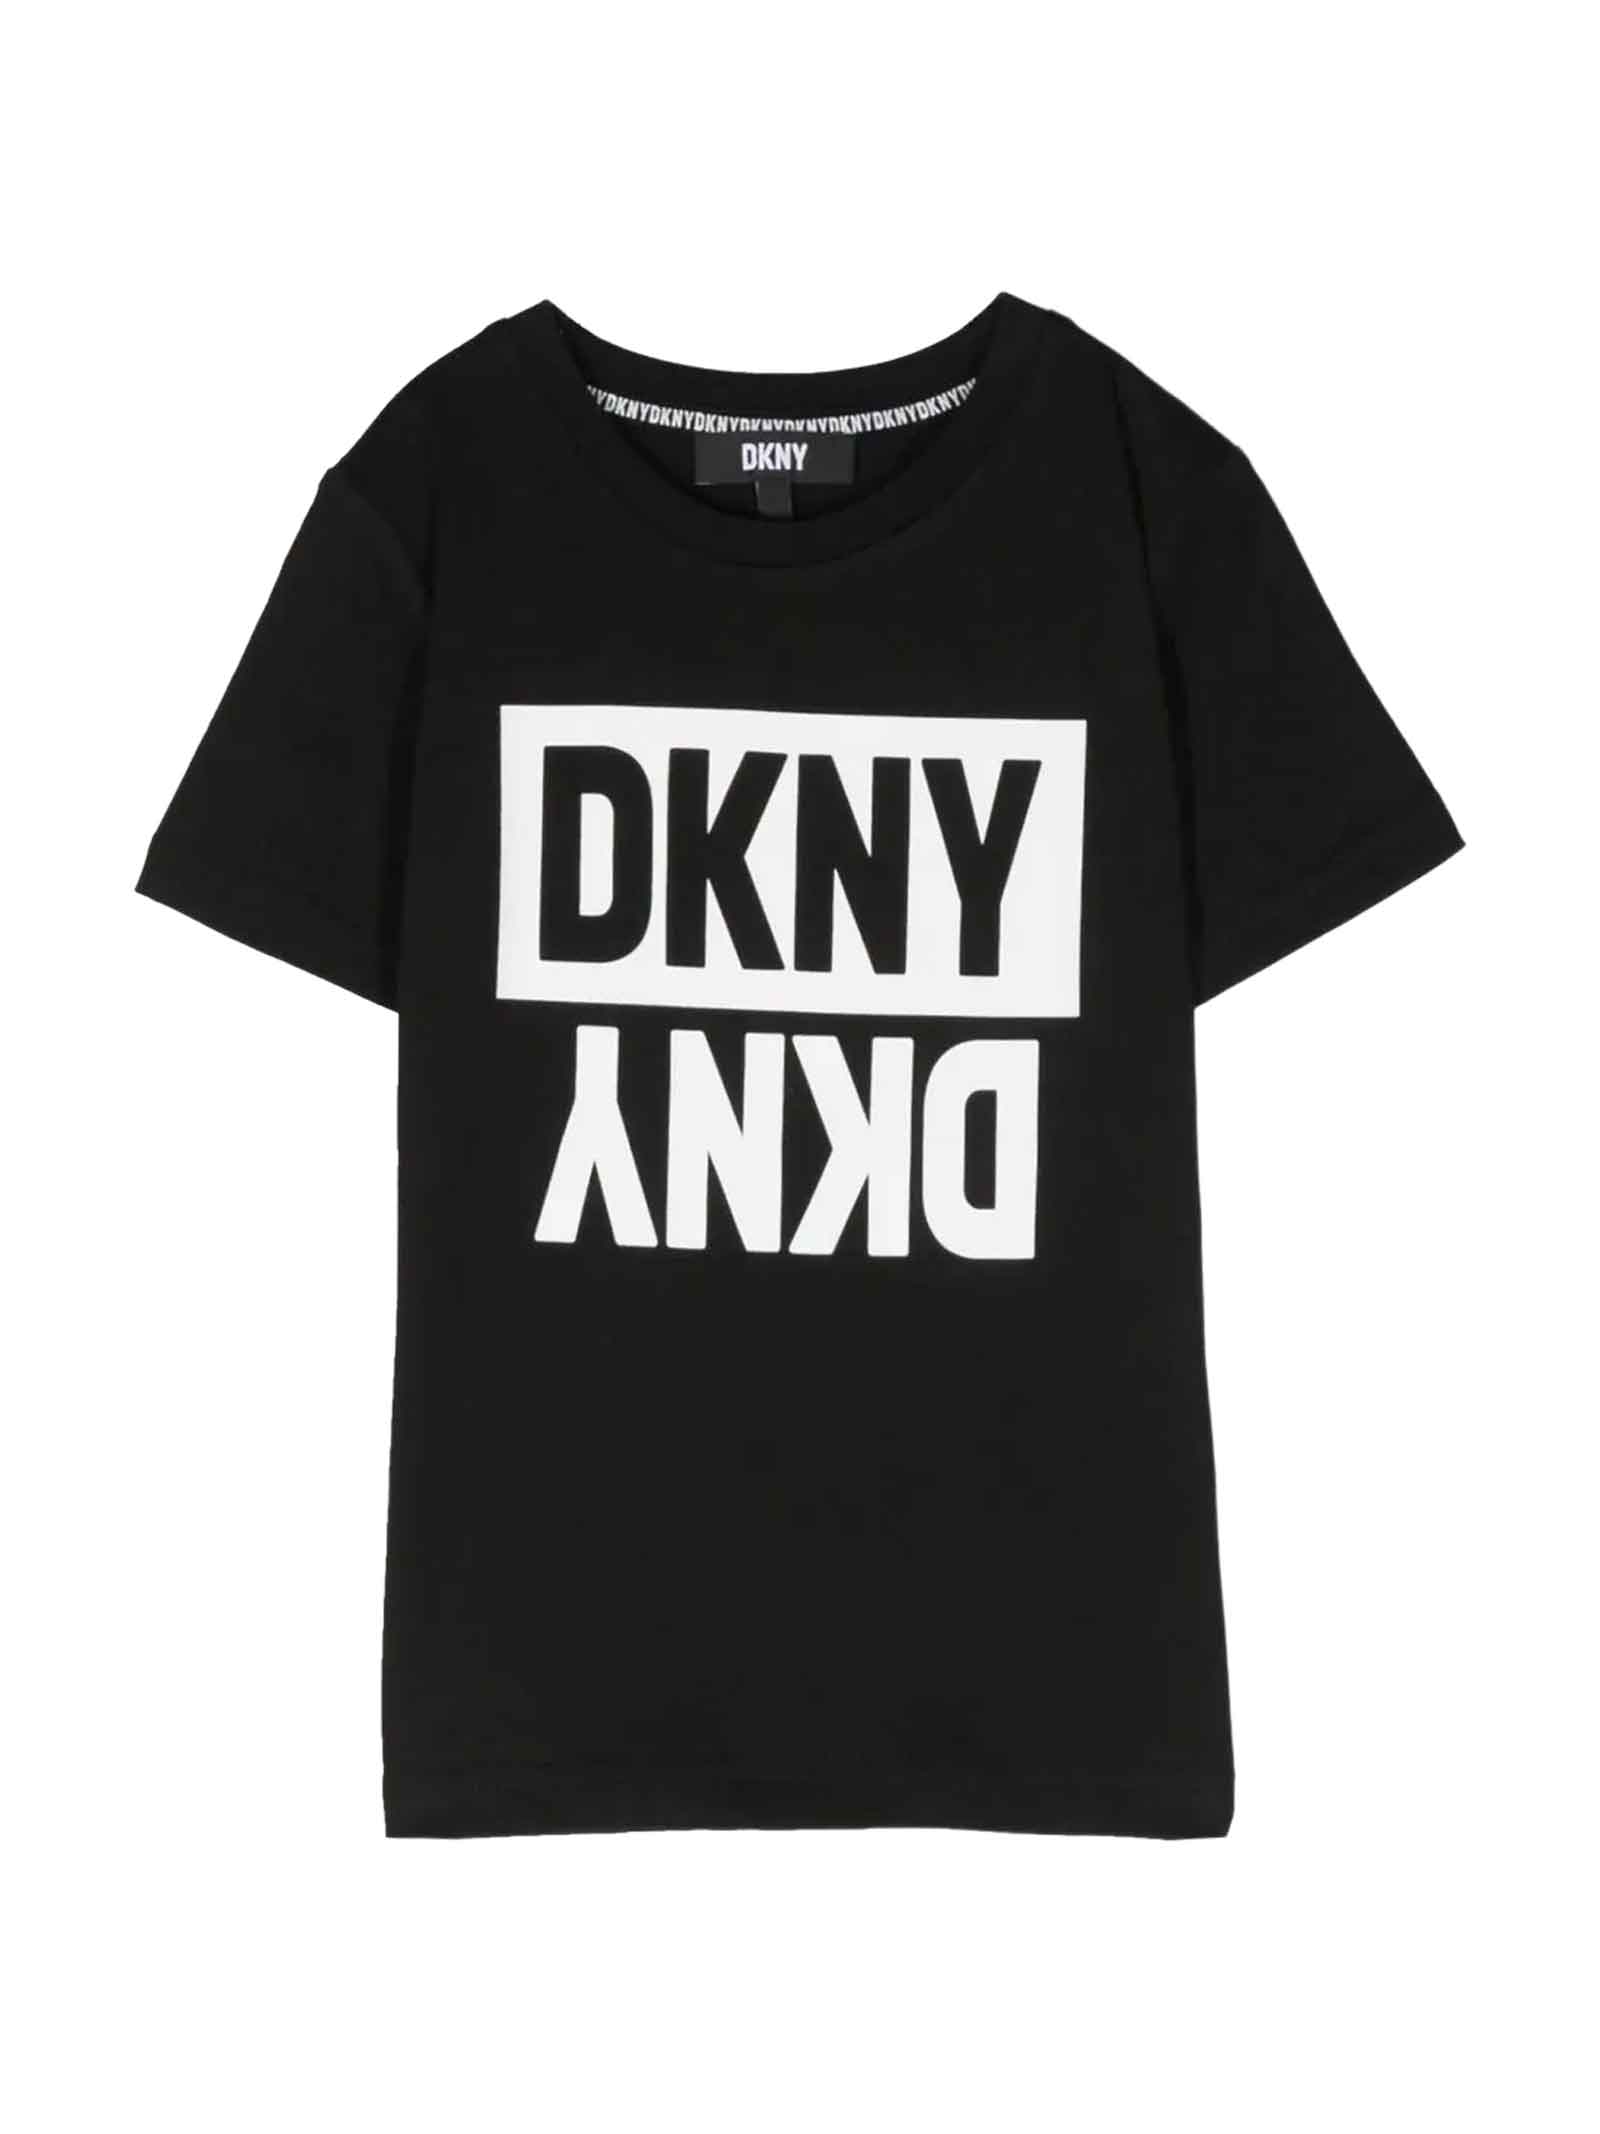 DKNY Black T-shirt Boy